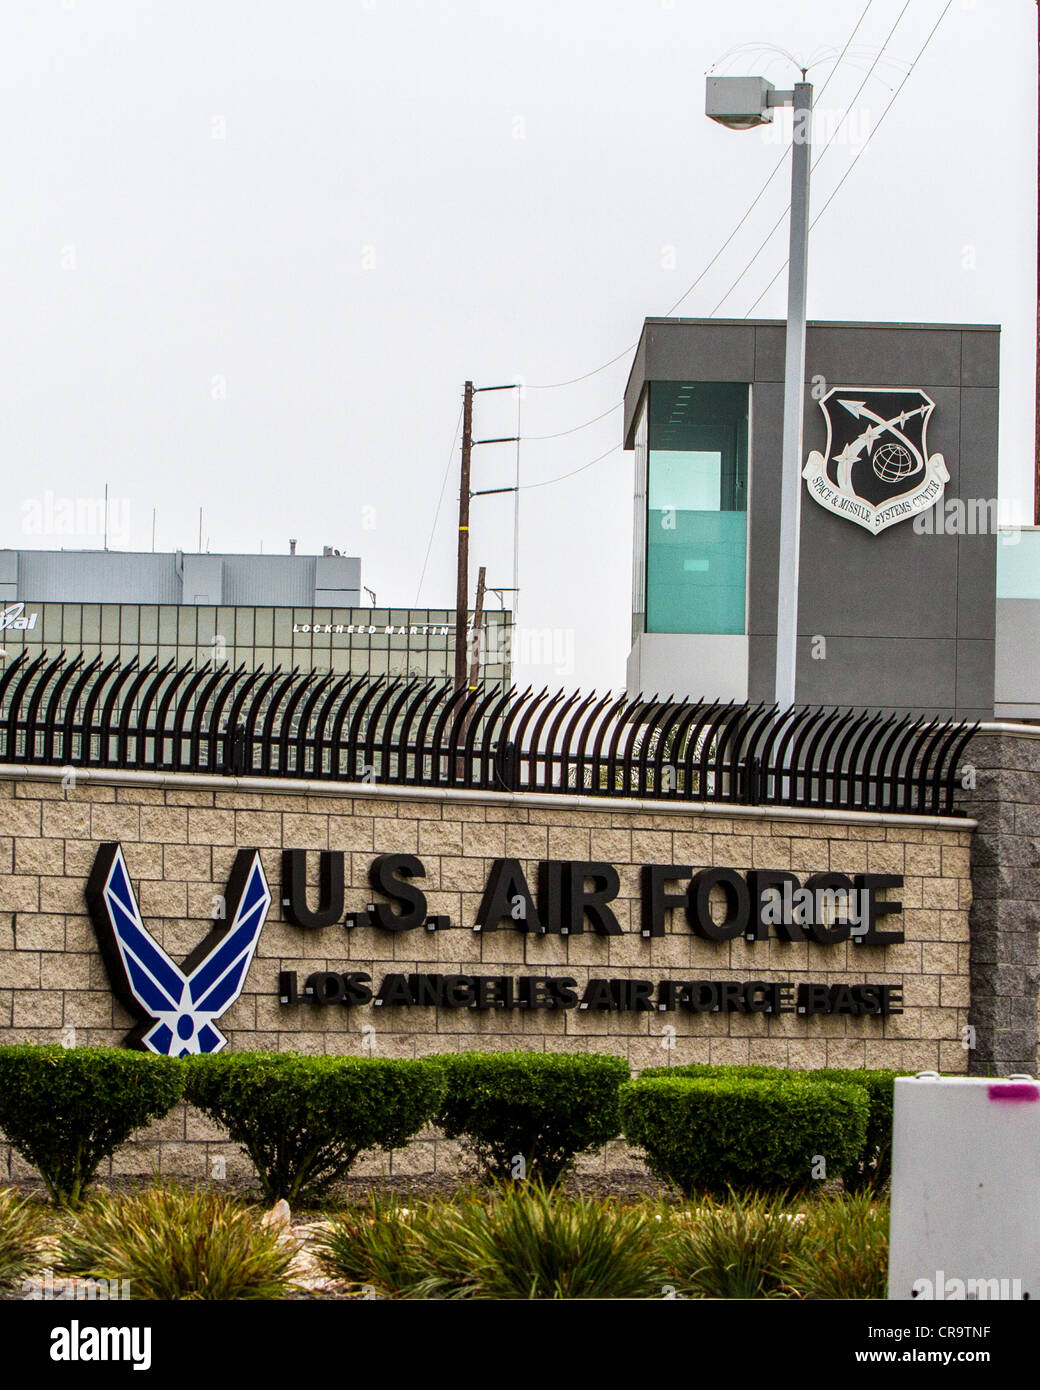 US Air Force Base Los Angeles in El Segundo California Stock Photo - Alamy